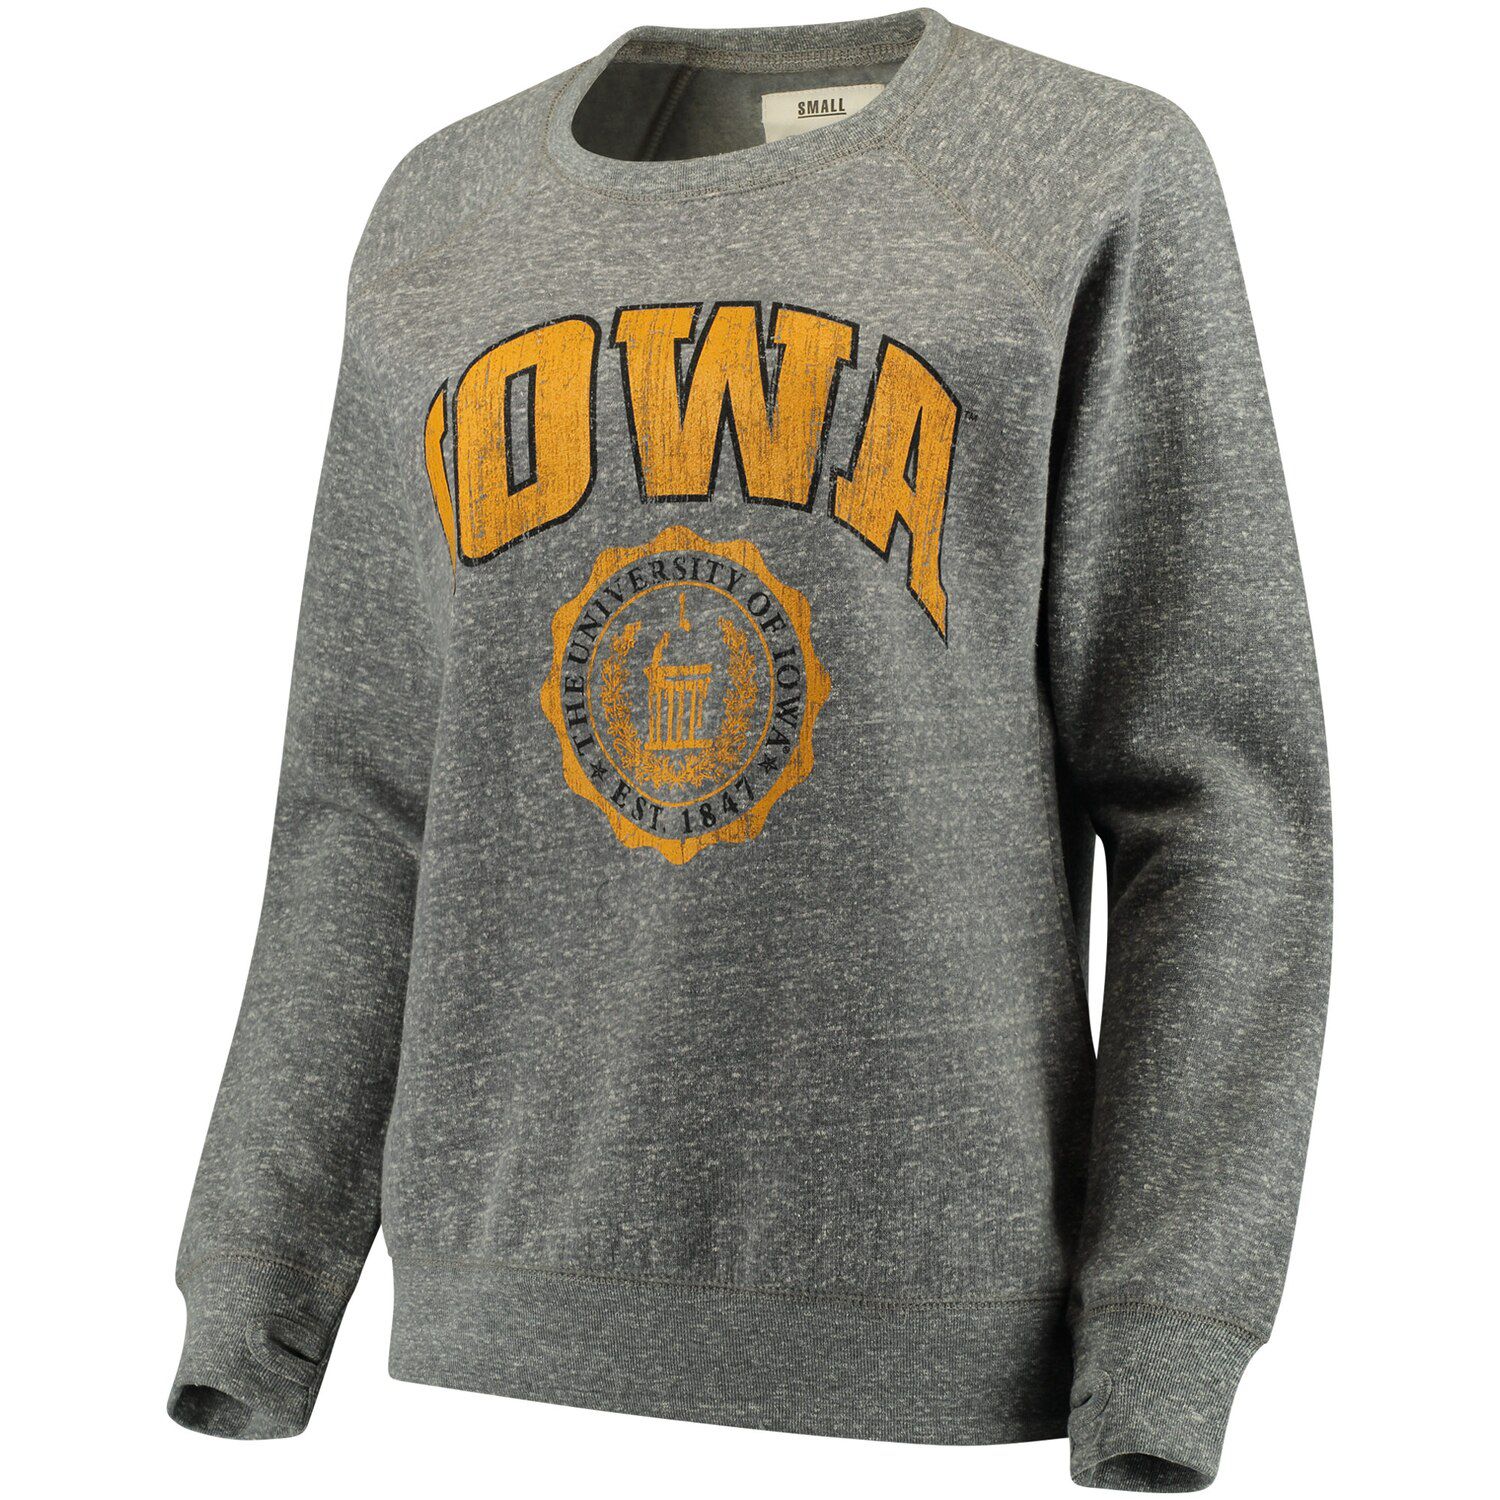 iowa hawkeye women's sweatshirt